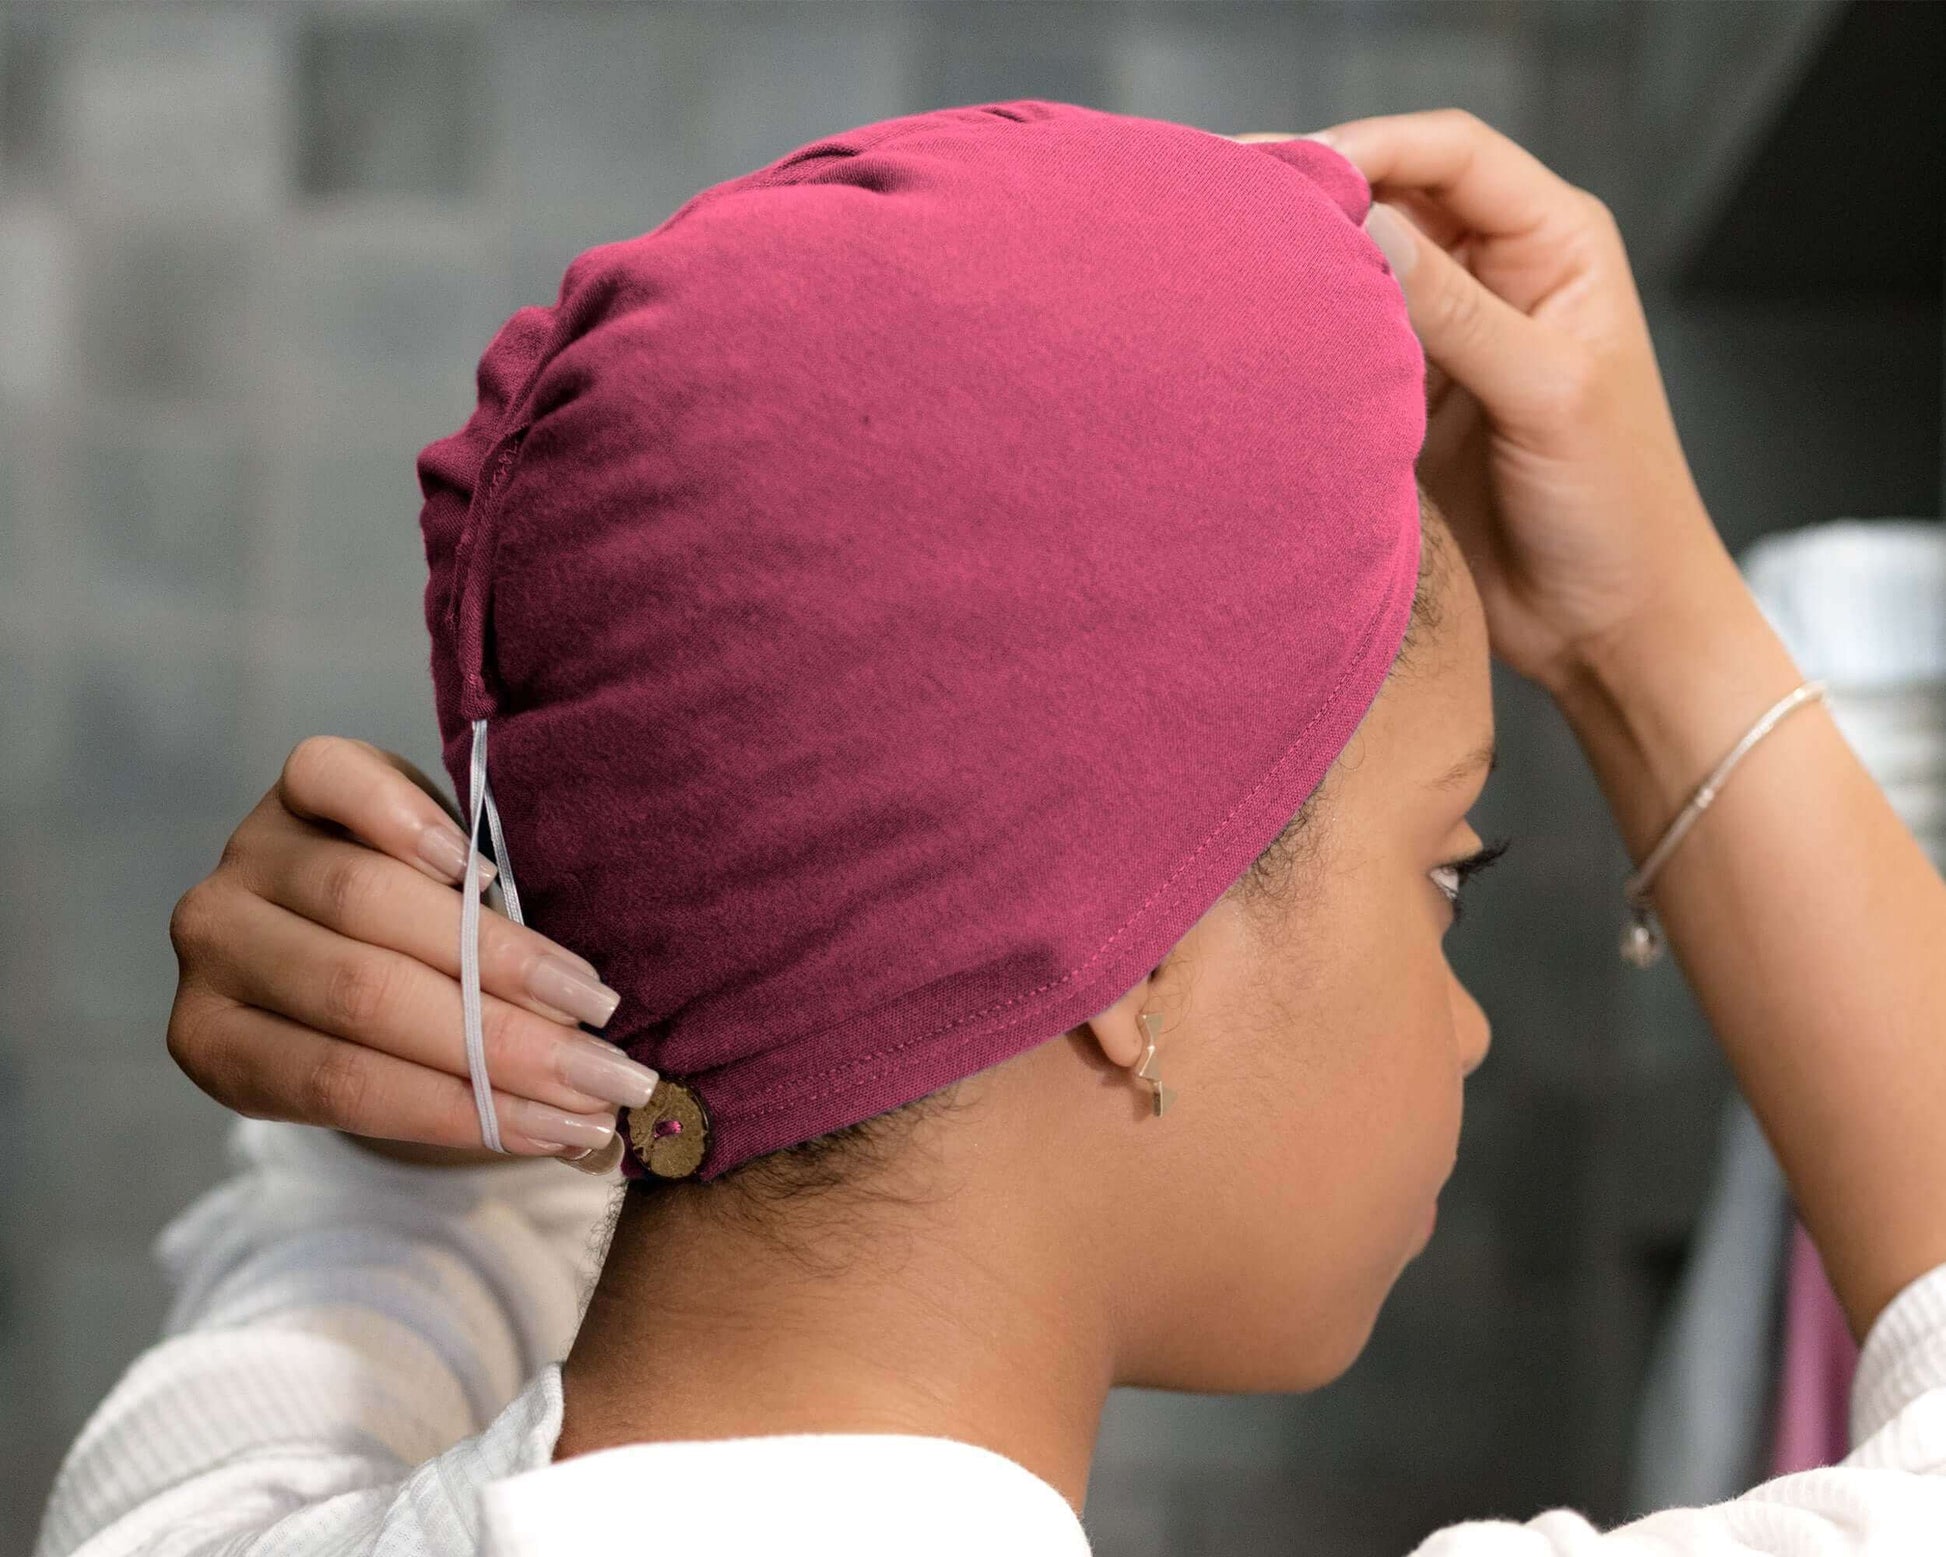 T-shirt Hair Towel Wrap Hood Rose Violet